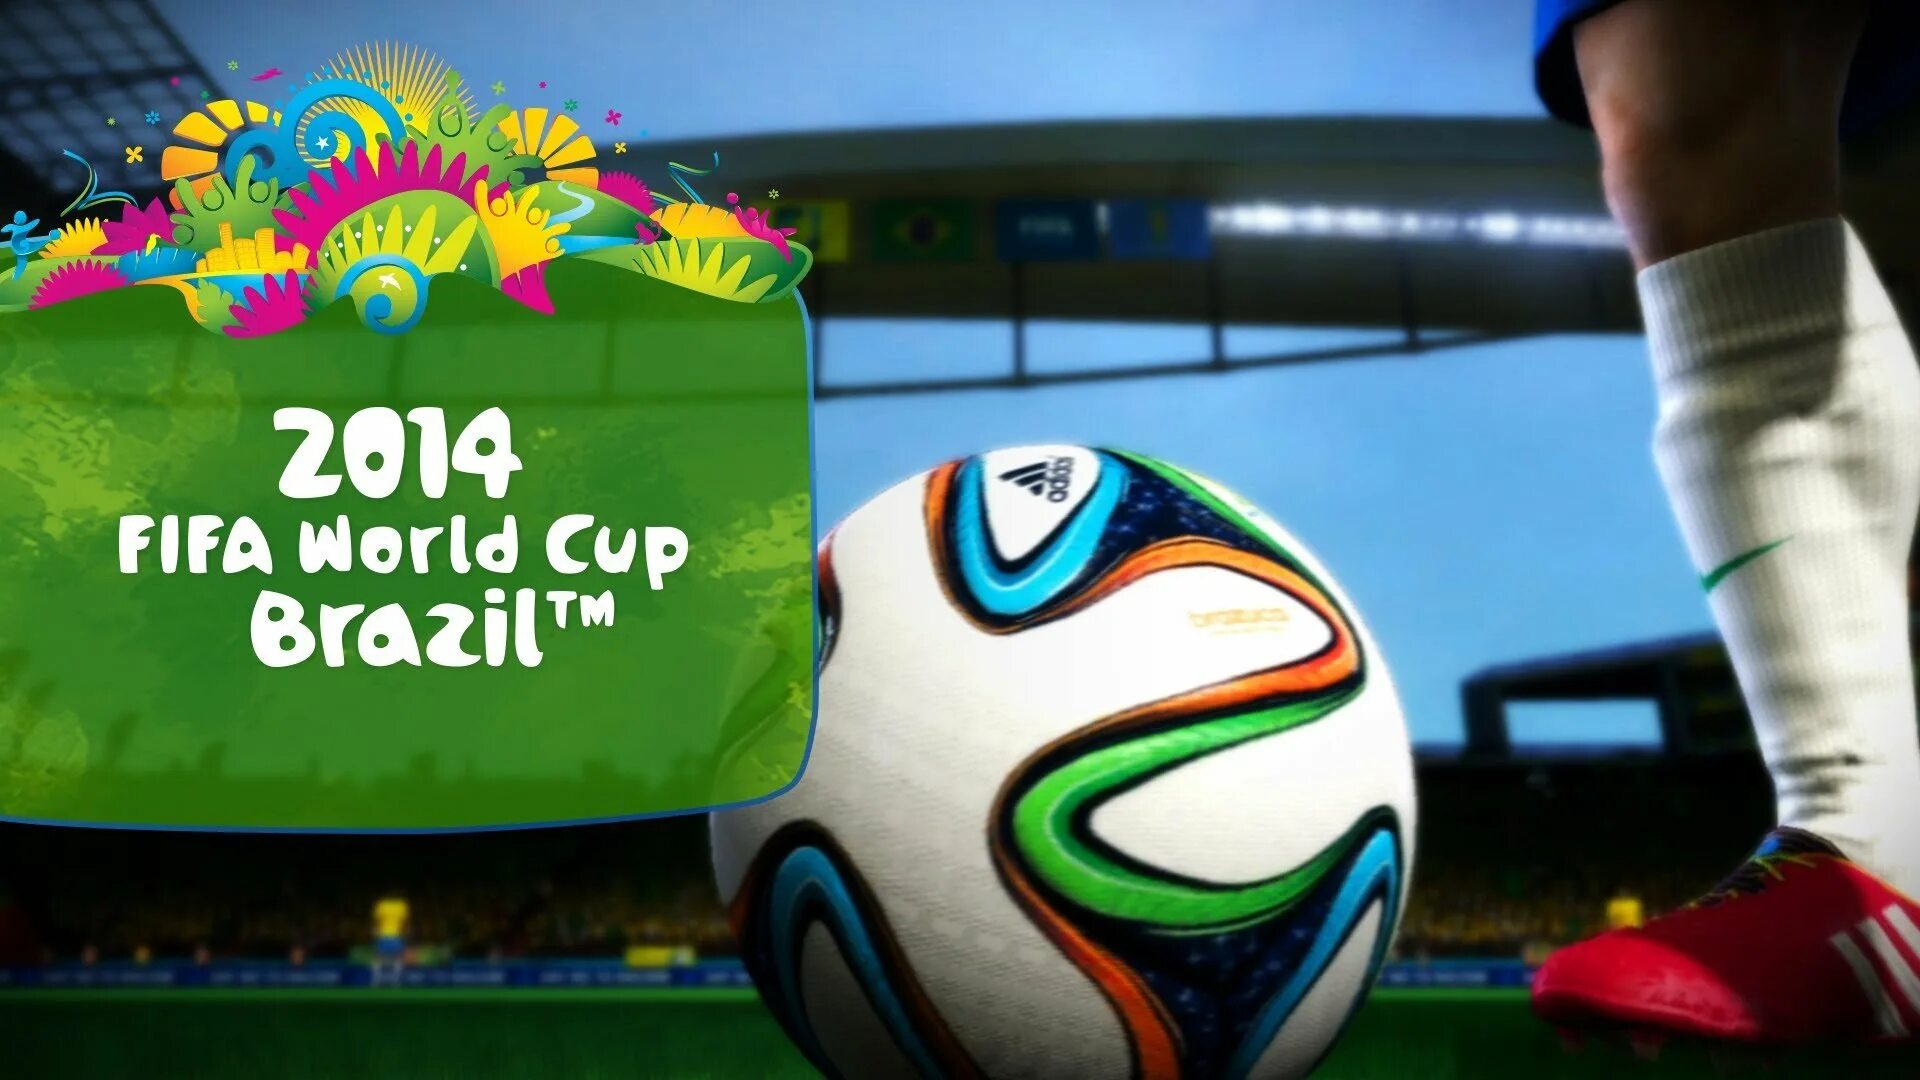 Мир футбола fifa. 2014 FIFA World Cup Brazil для Xbox 360. ФИФА 14 ворлд кап Бразилия. ФИФА 14 ворлд кап 2014 Бразилия. ЧМ 2014 В FIFA 14.